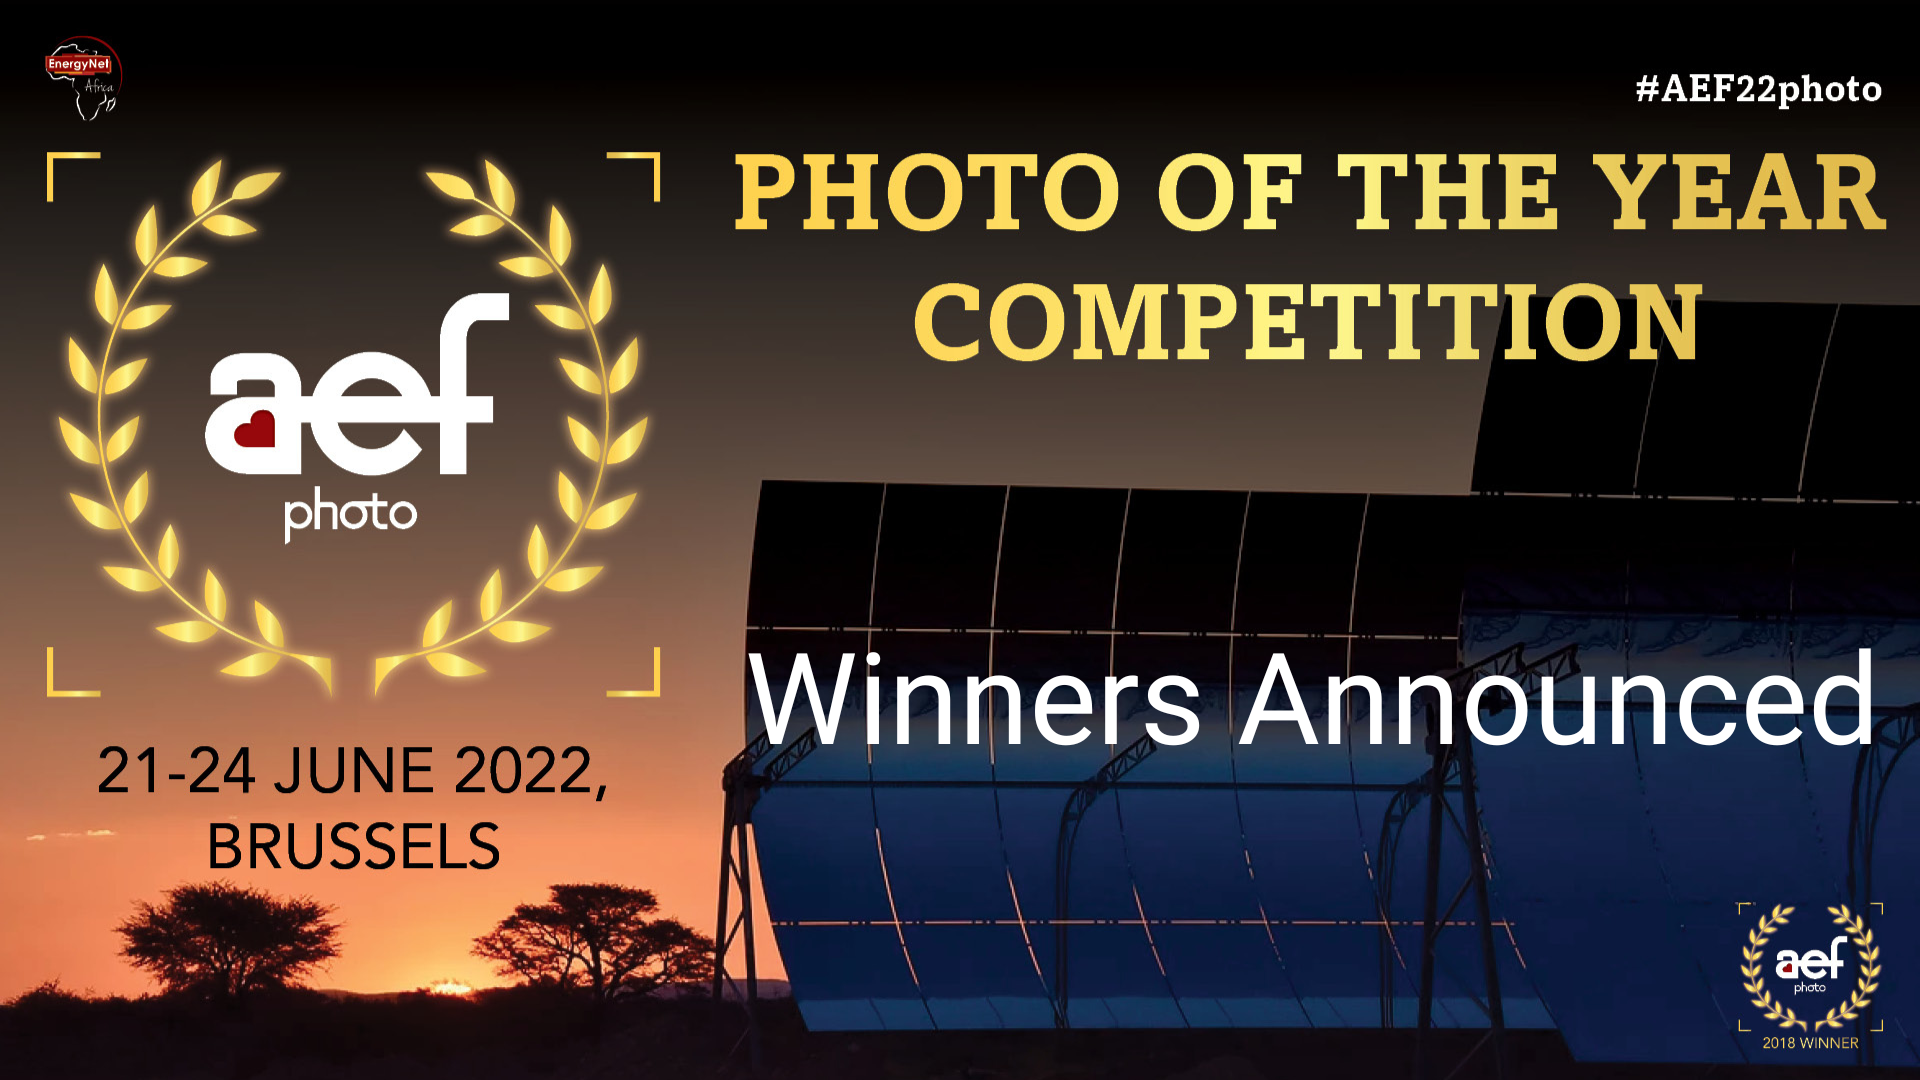 aef22 photo winners announced 